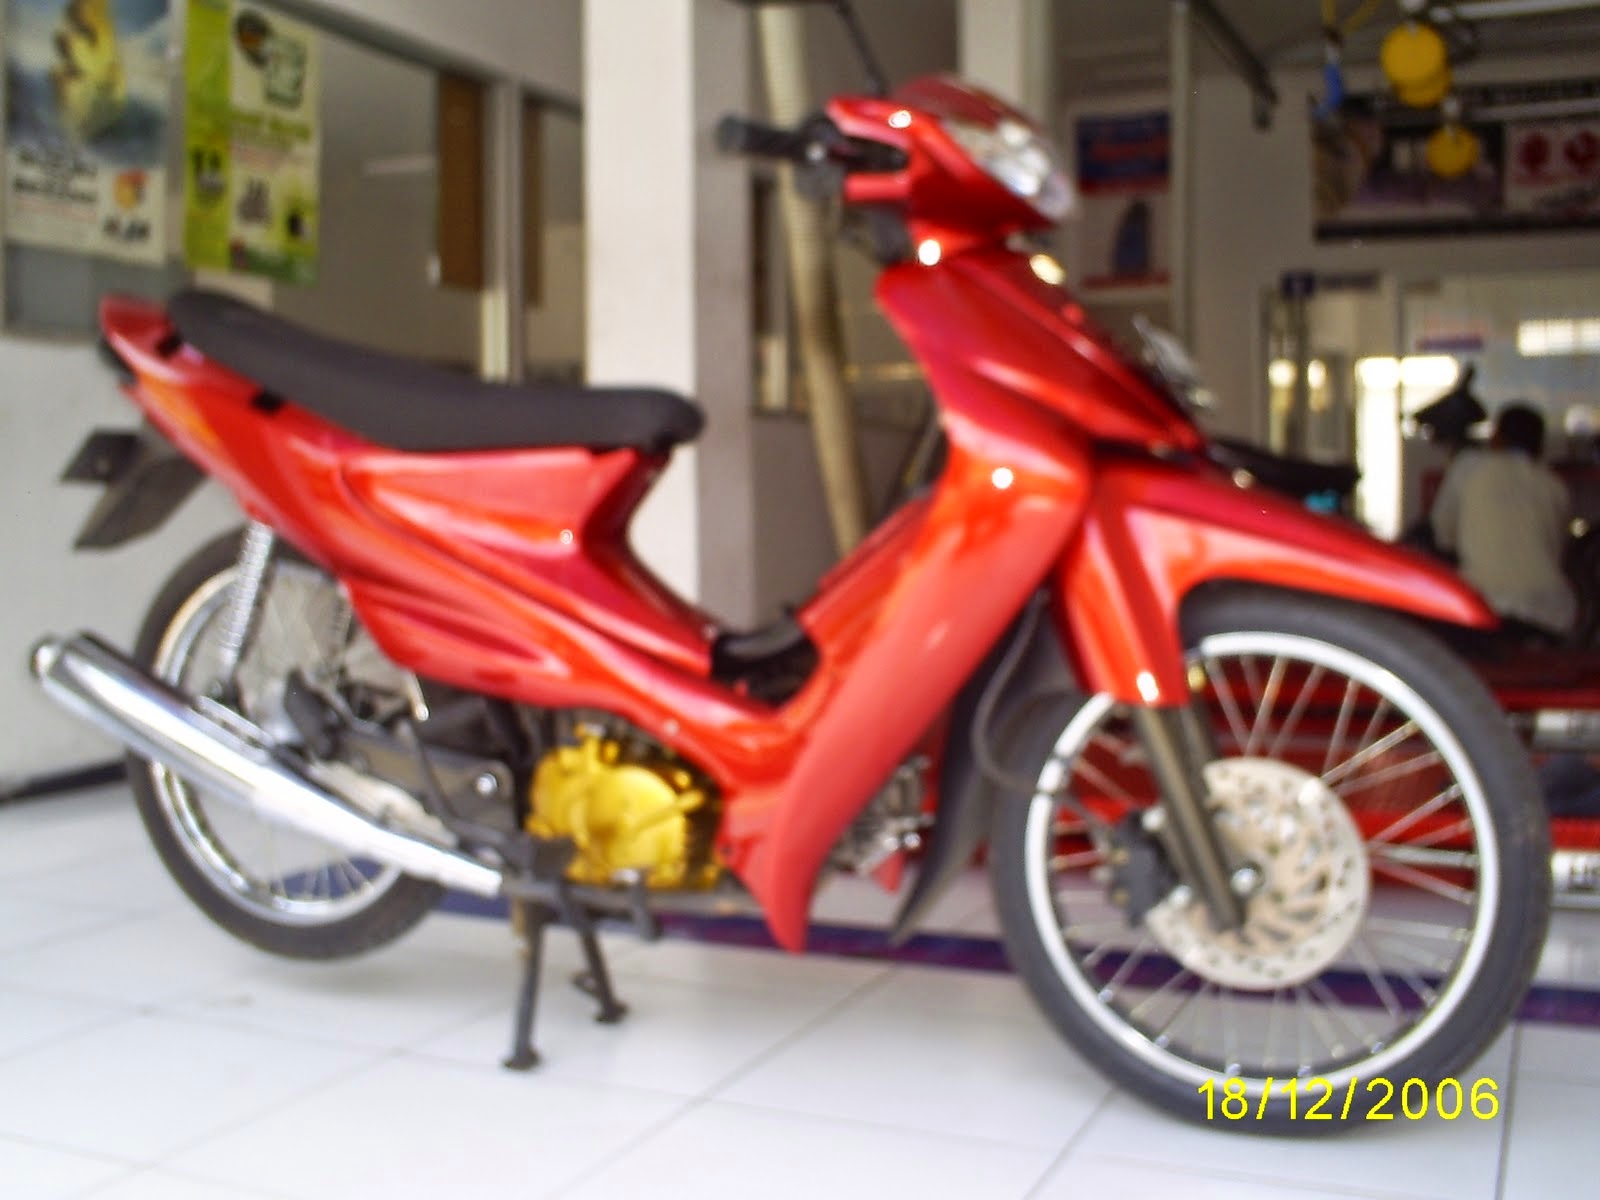 Modifikasi Motor Suzuki Smash 110 Thecitycyclist